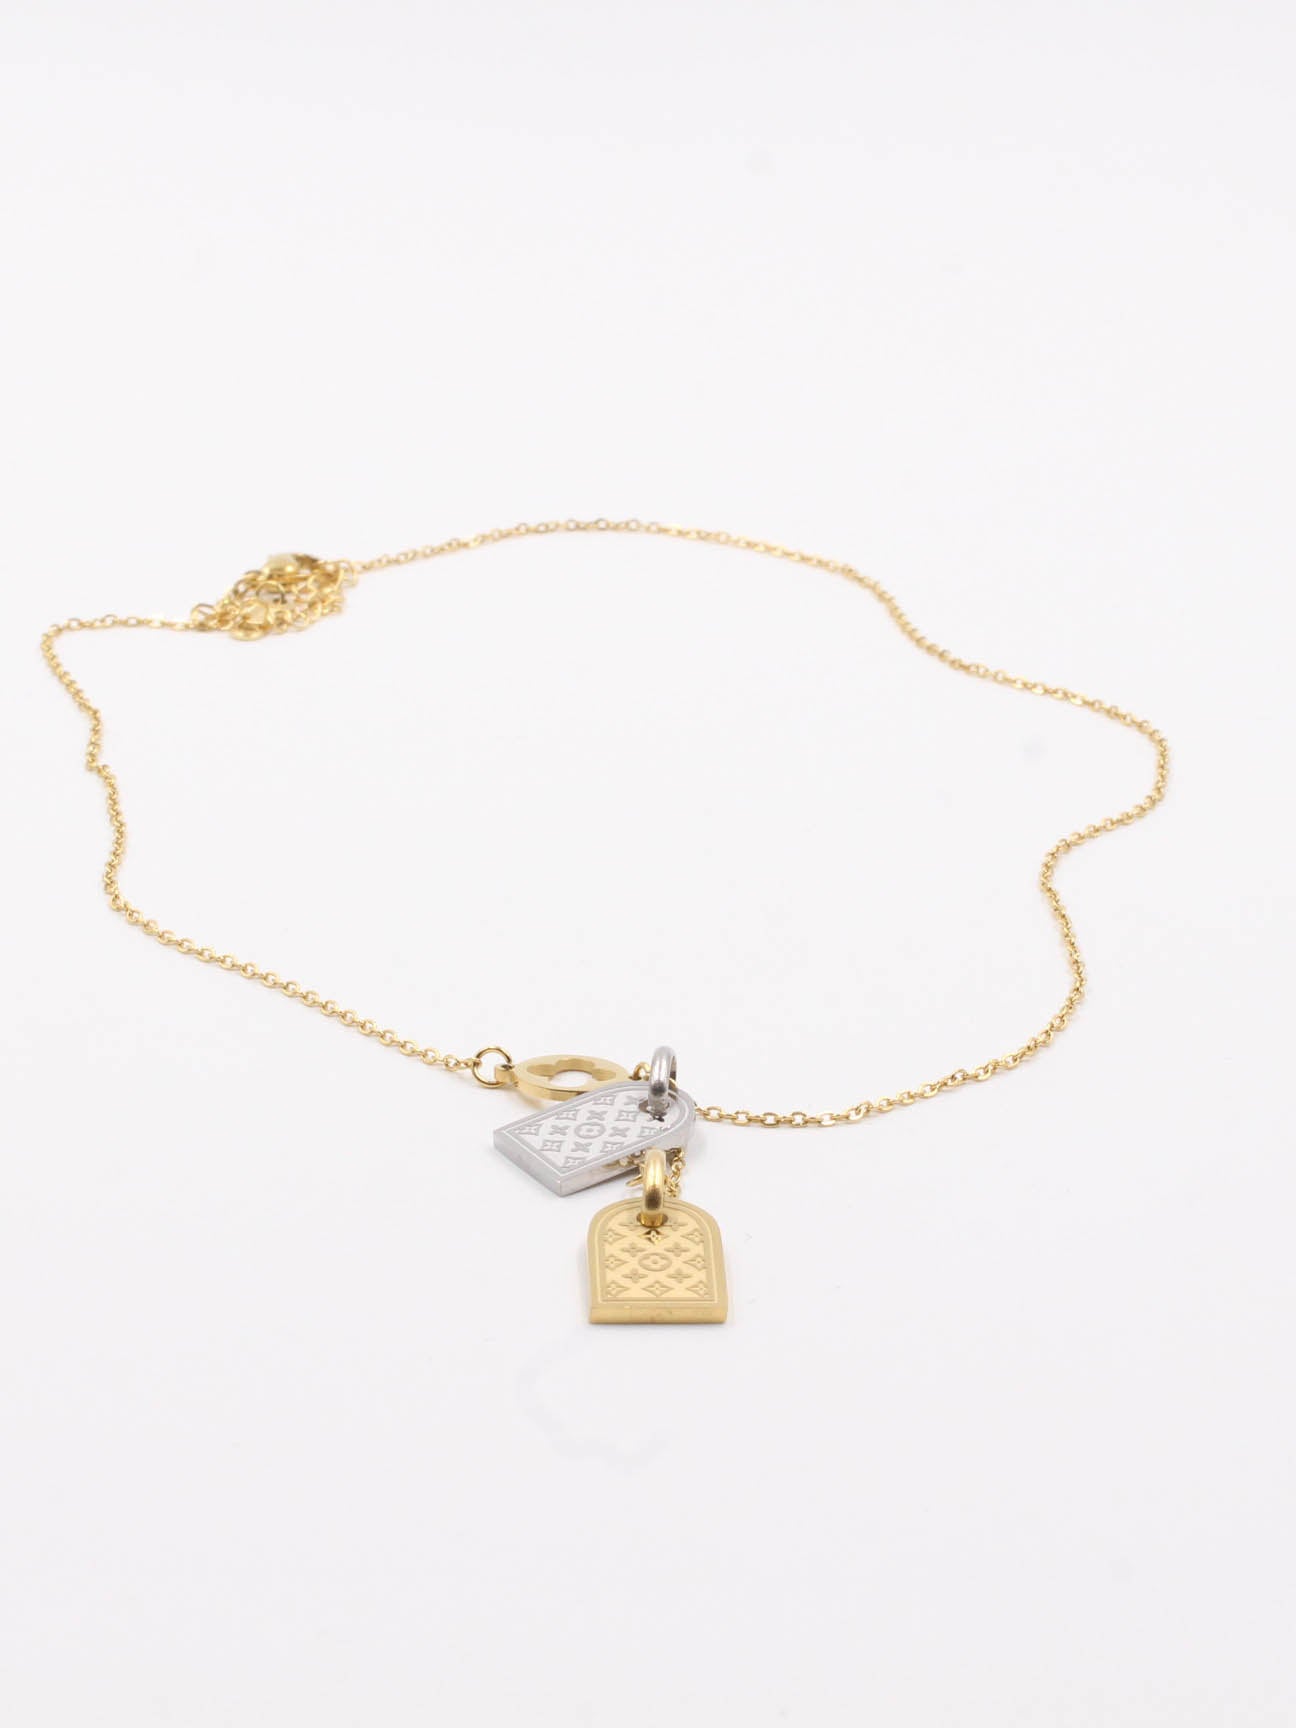 Louis Vuitton gold necklace - سلسال لويس فيتون الذهبي سلسال Jewel ذهبي  